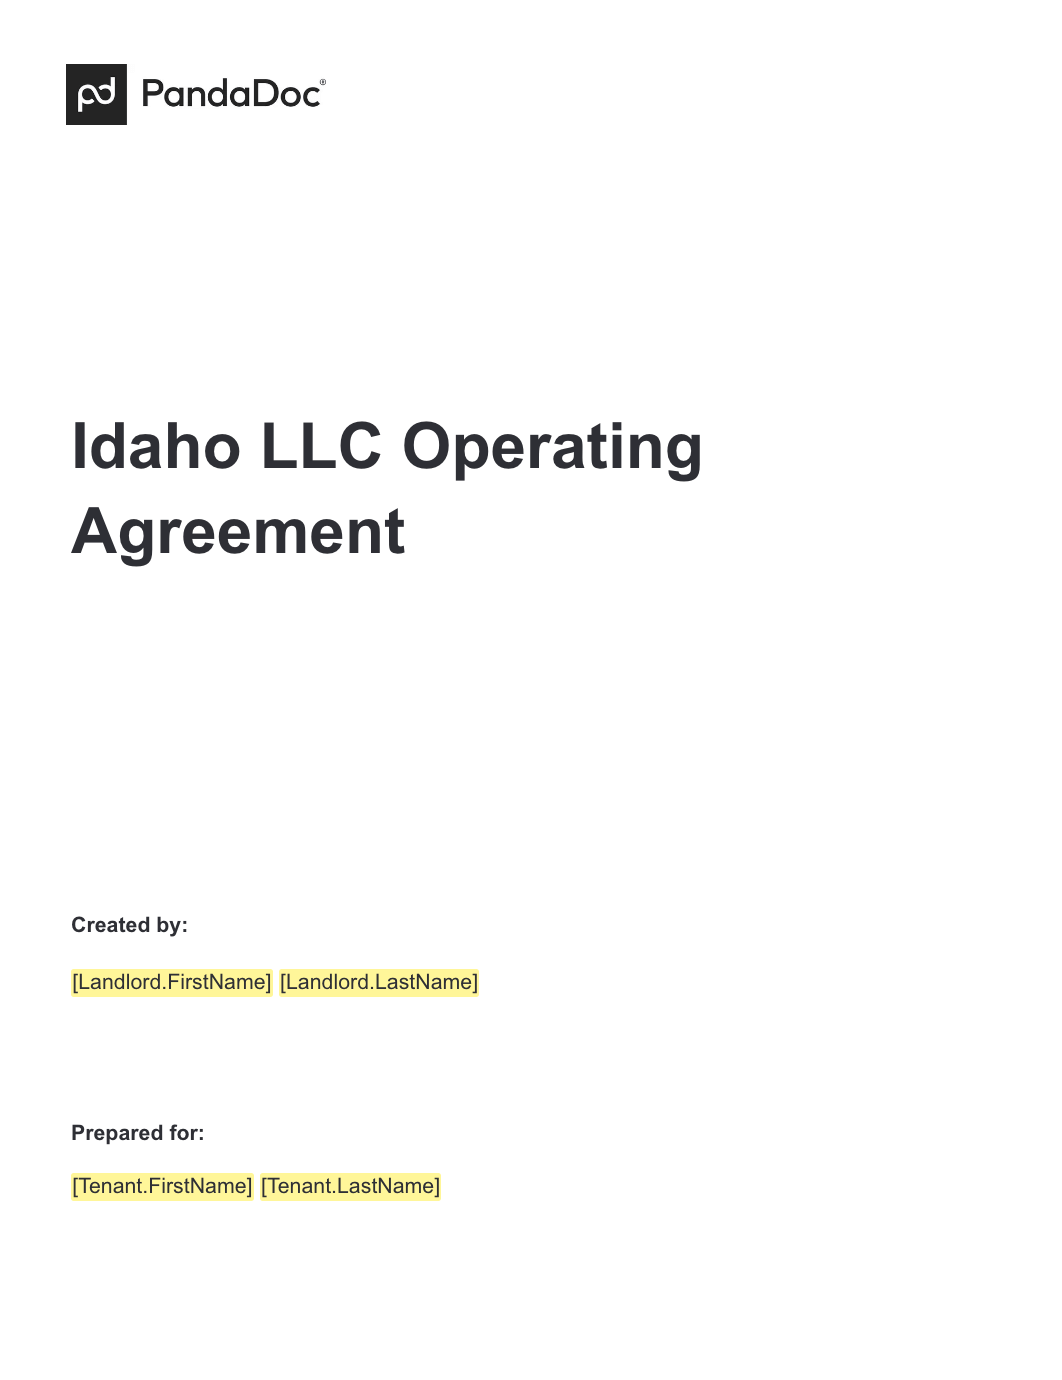 Idaho LLC Operating Agreement 